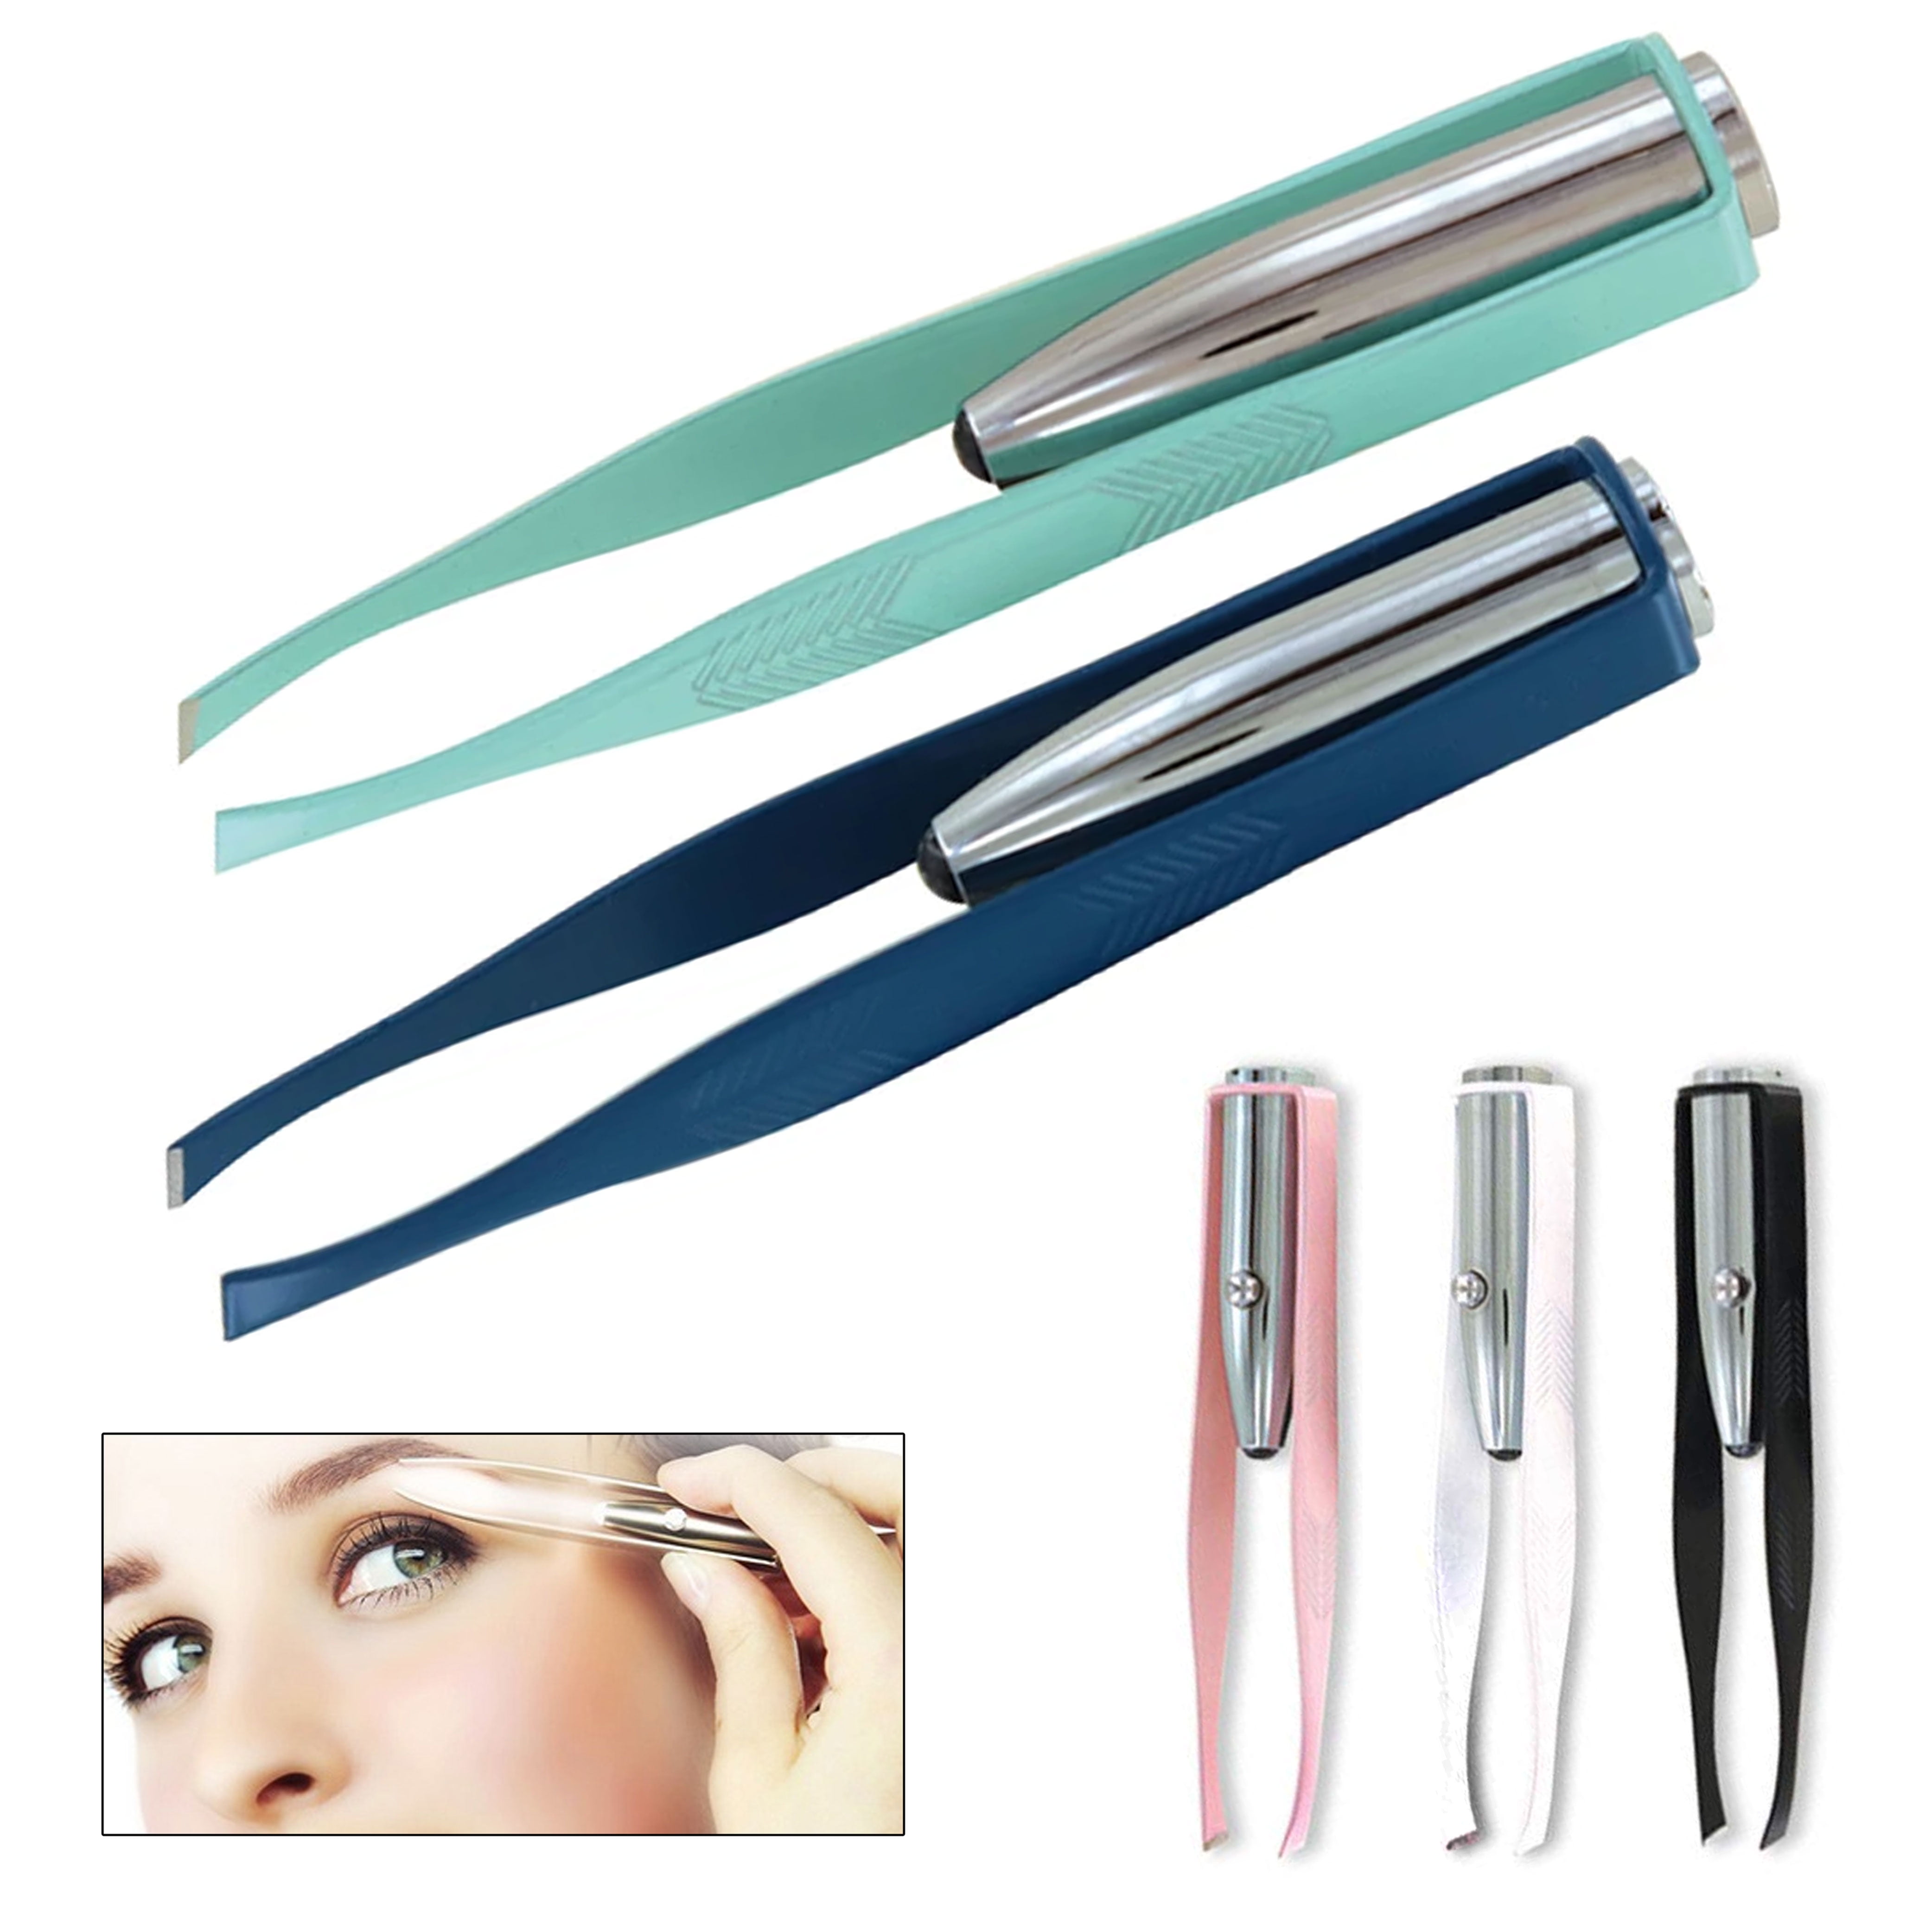 3 Stainless Steel Make Up LED Light Eyelash Eyebrow Hair Removal Lighted  Tweezer